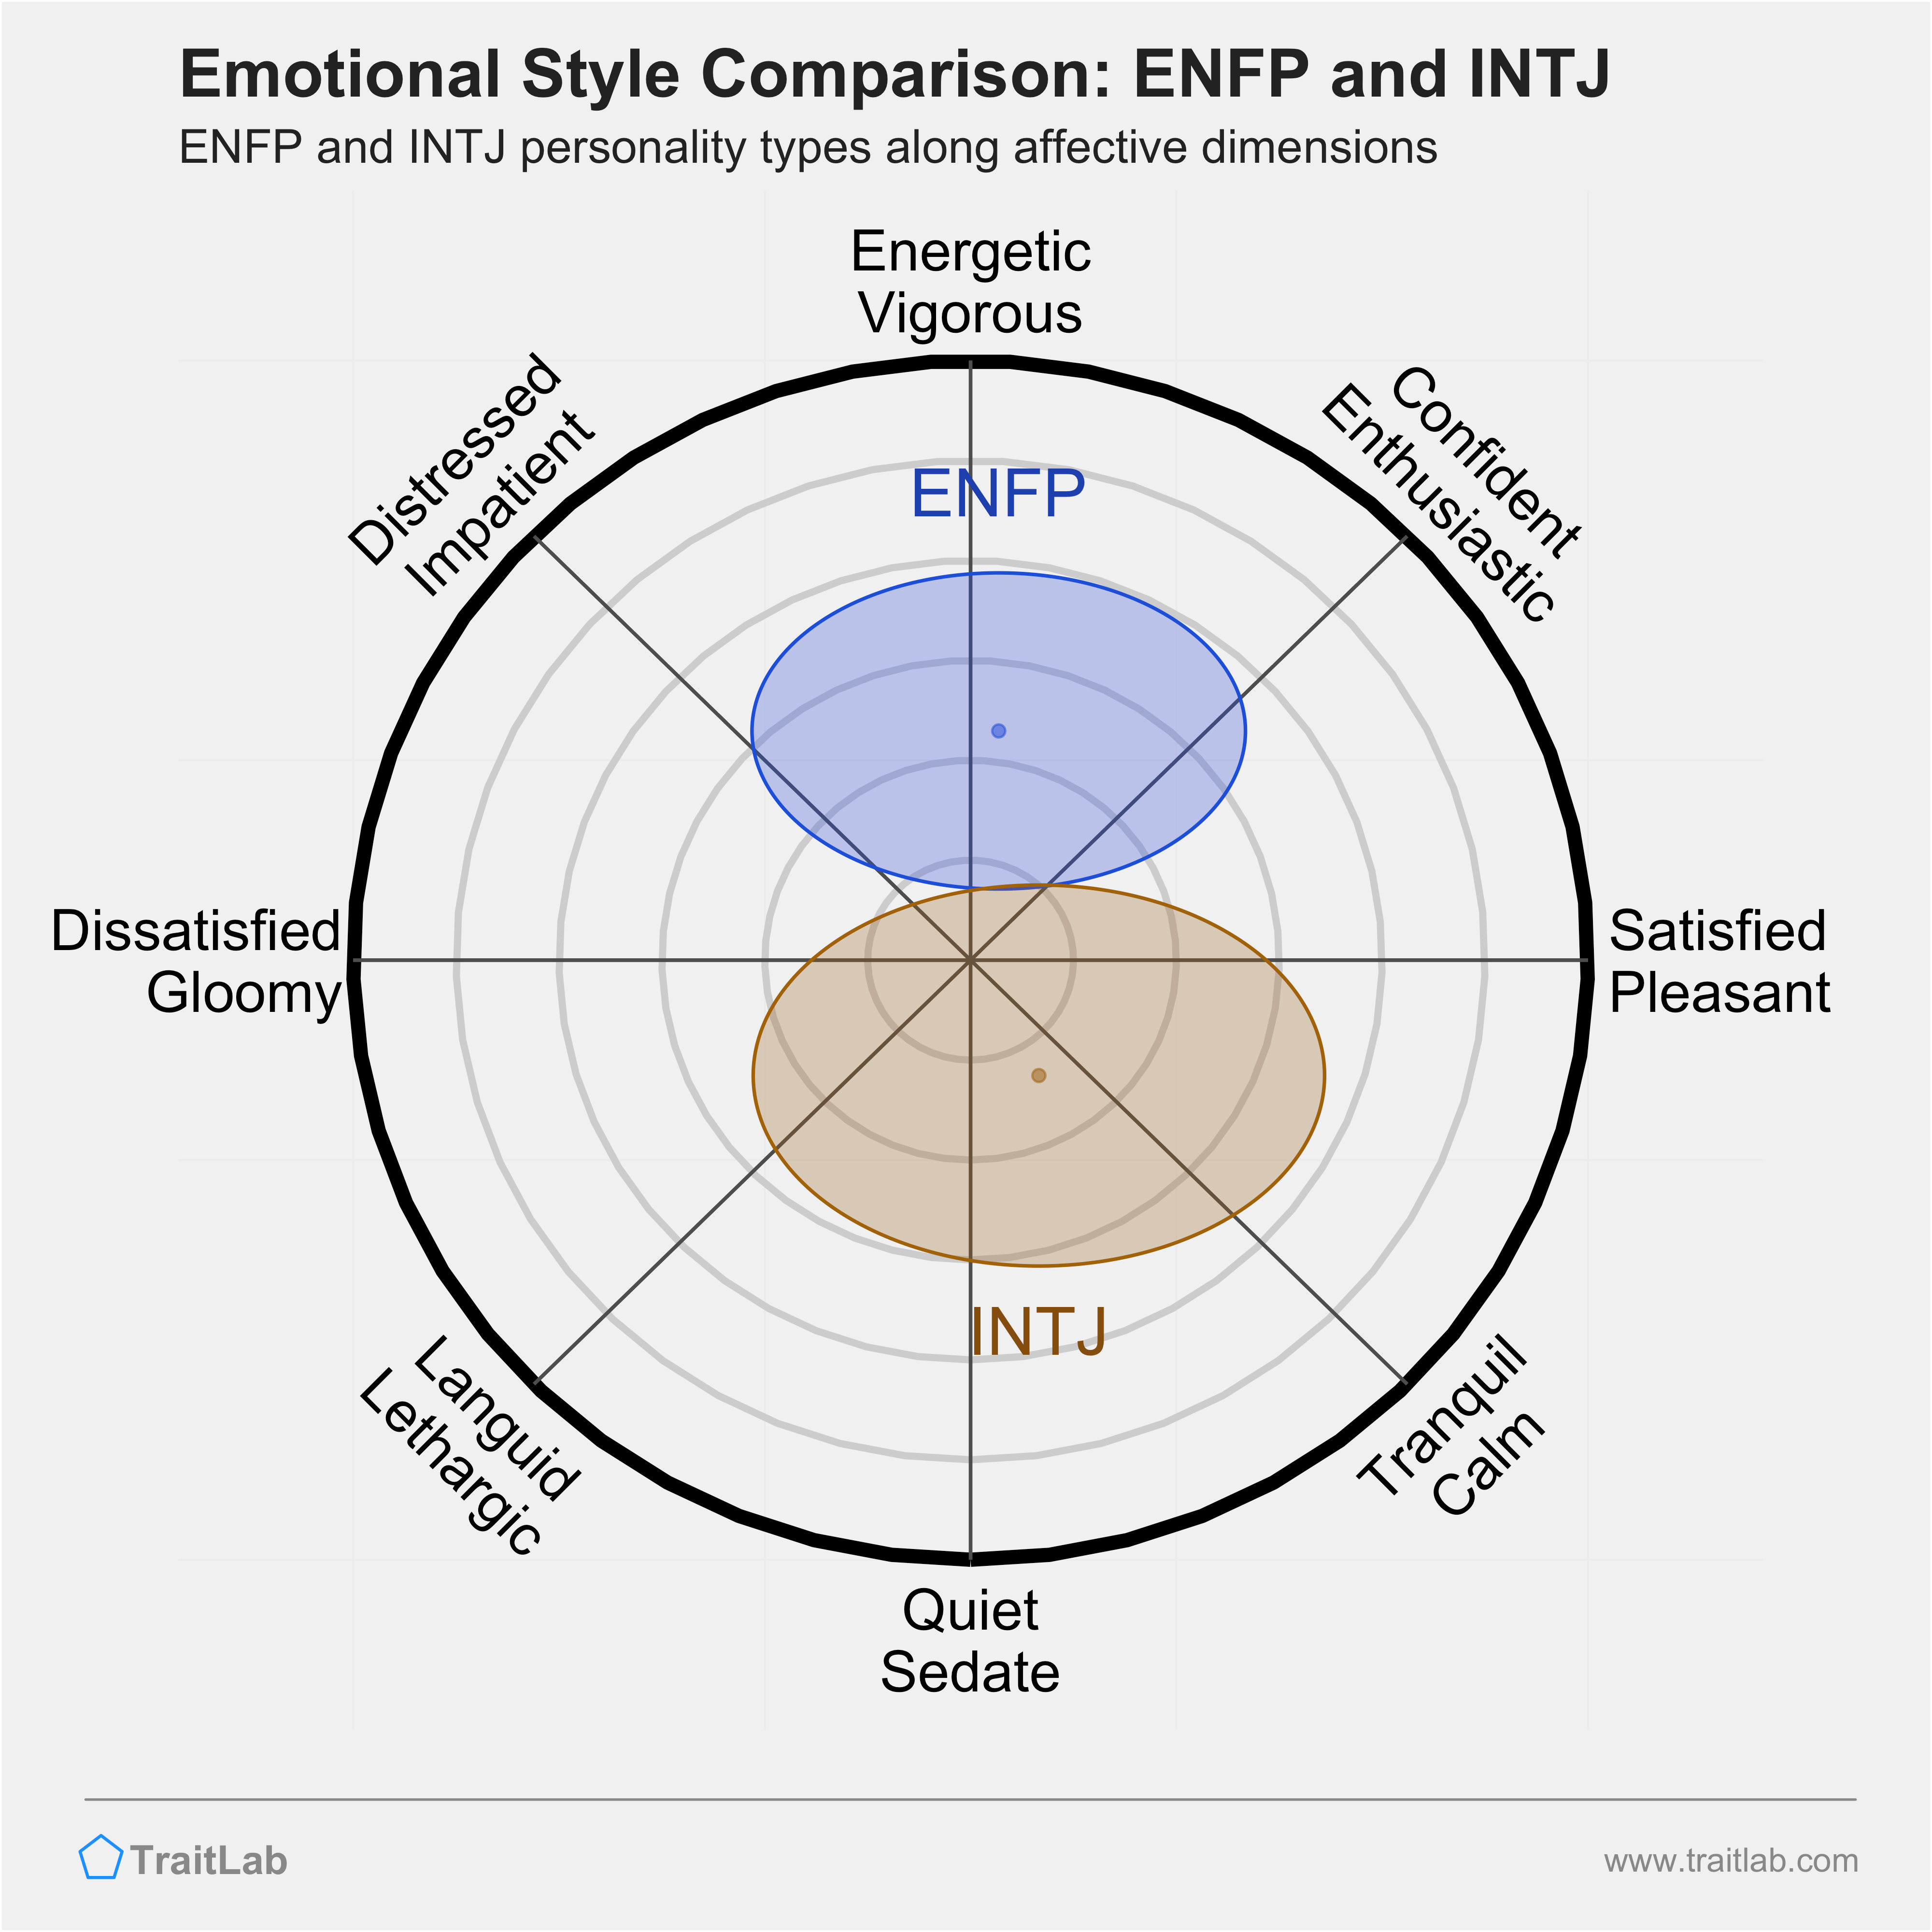 ENFP and INTJ comparison across emotional (affective) dimensions